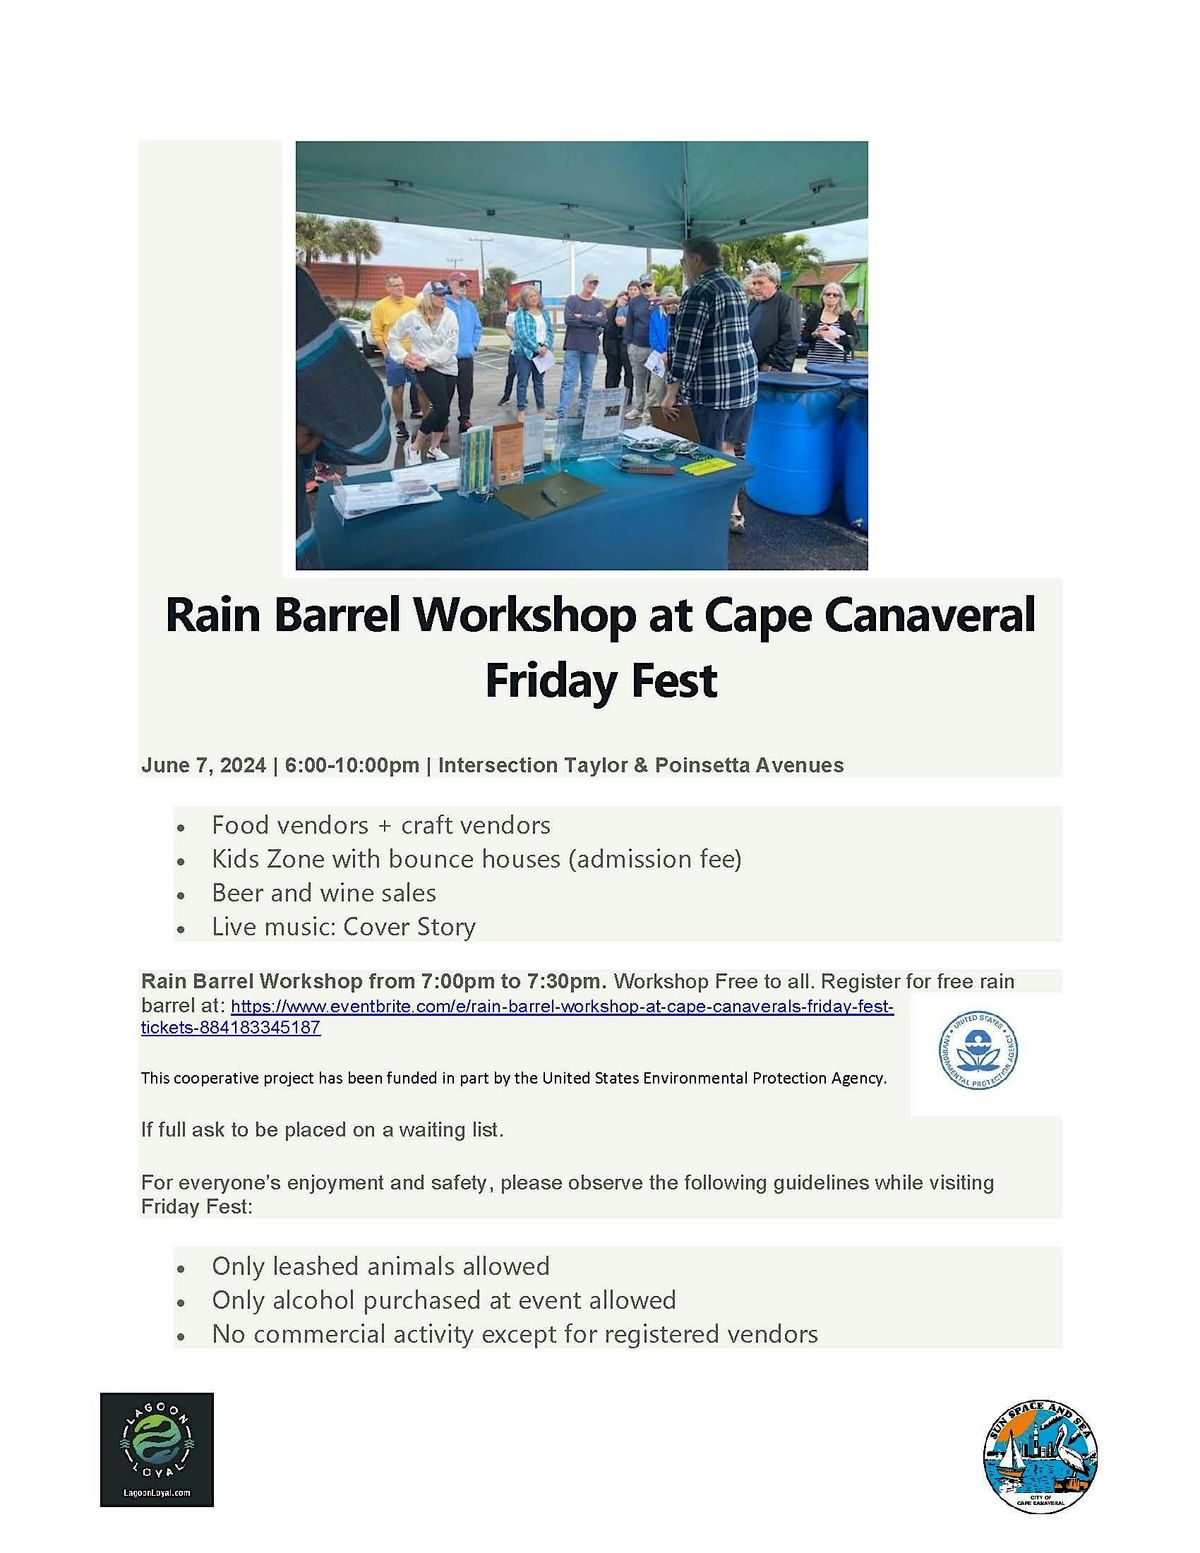 Rain Barrel Workshop At Cape Canaveral's Friday Fest